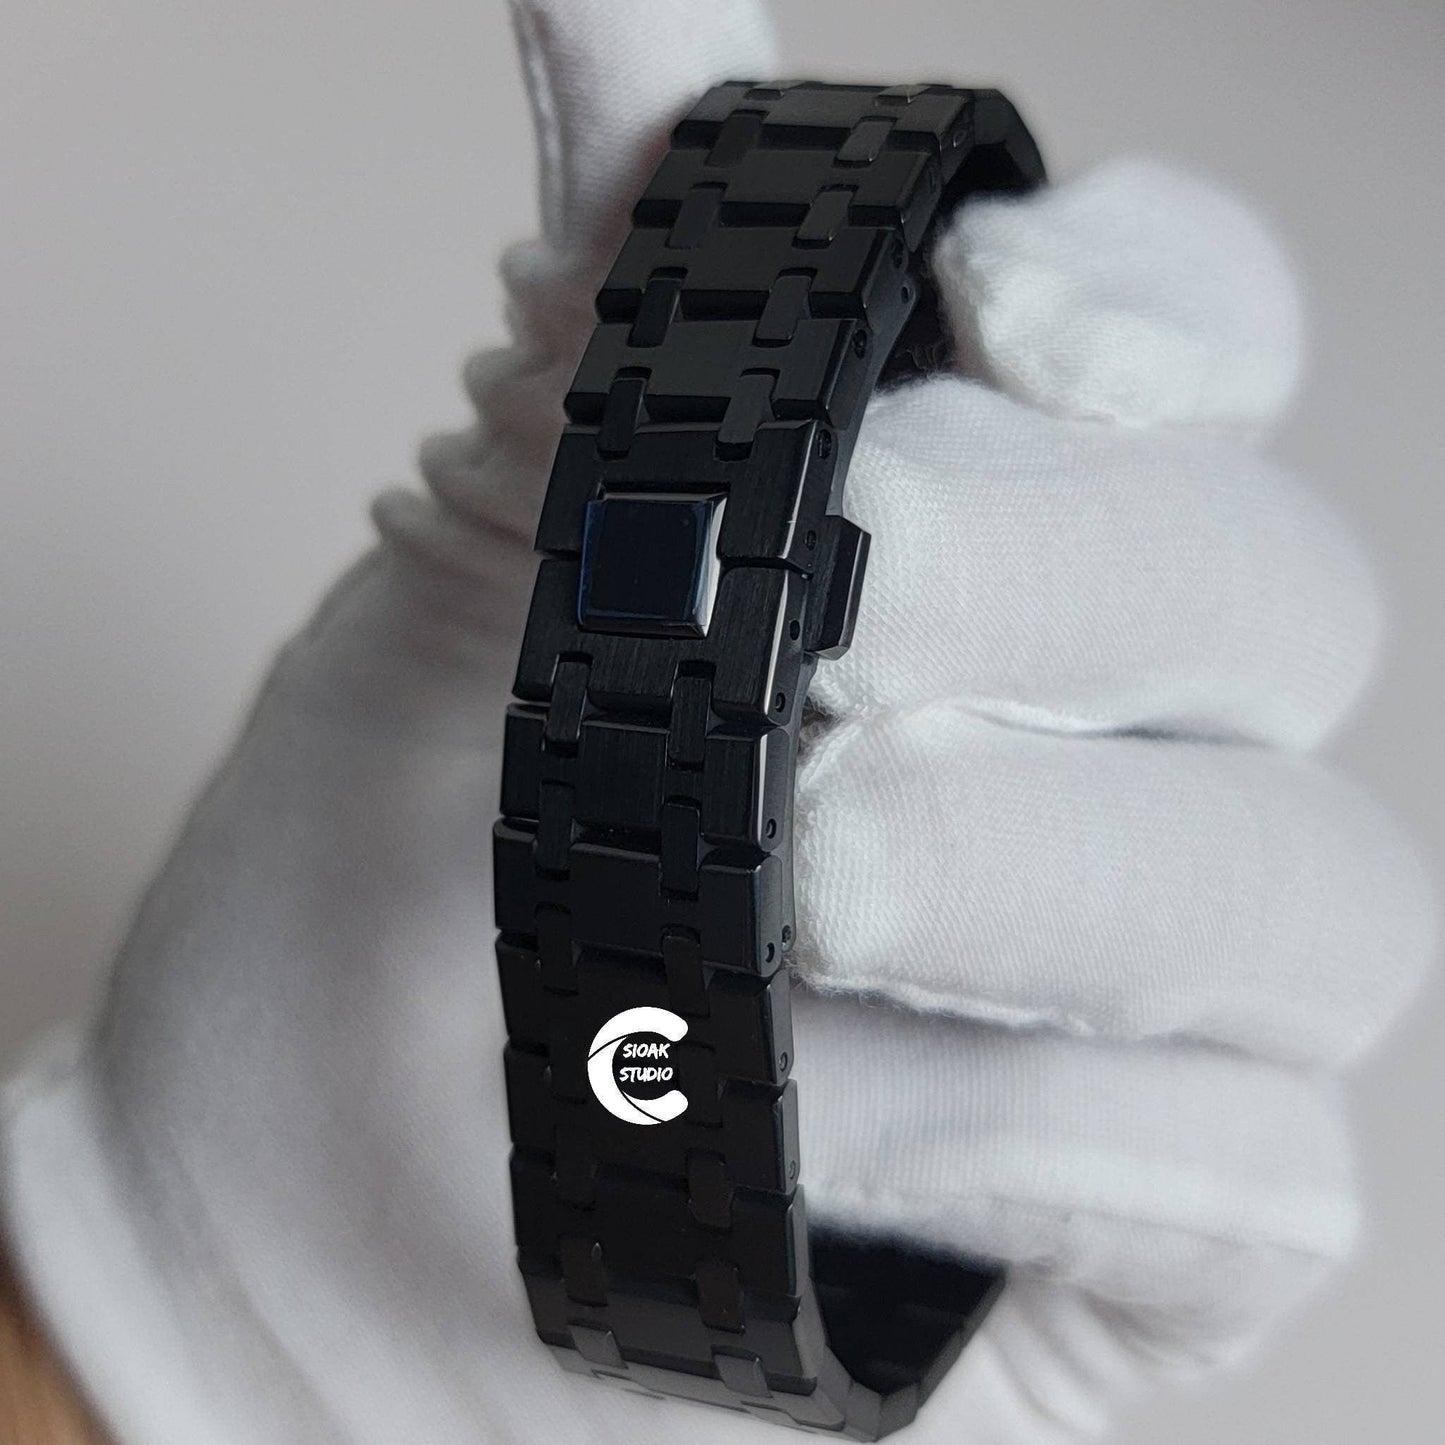 Casioak Mod Watch Black Case Metal Strap Black Time Mark Black Dial 44 mm - Casioak Studio